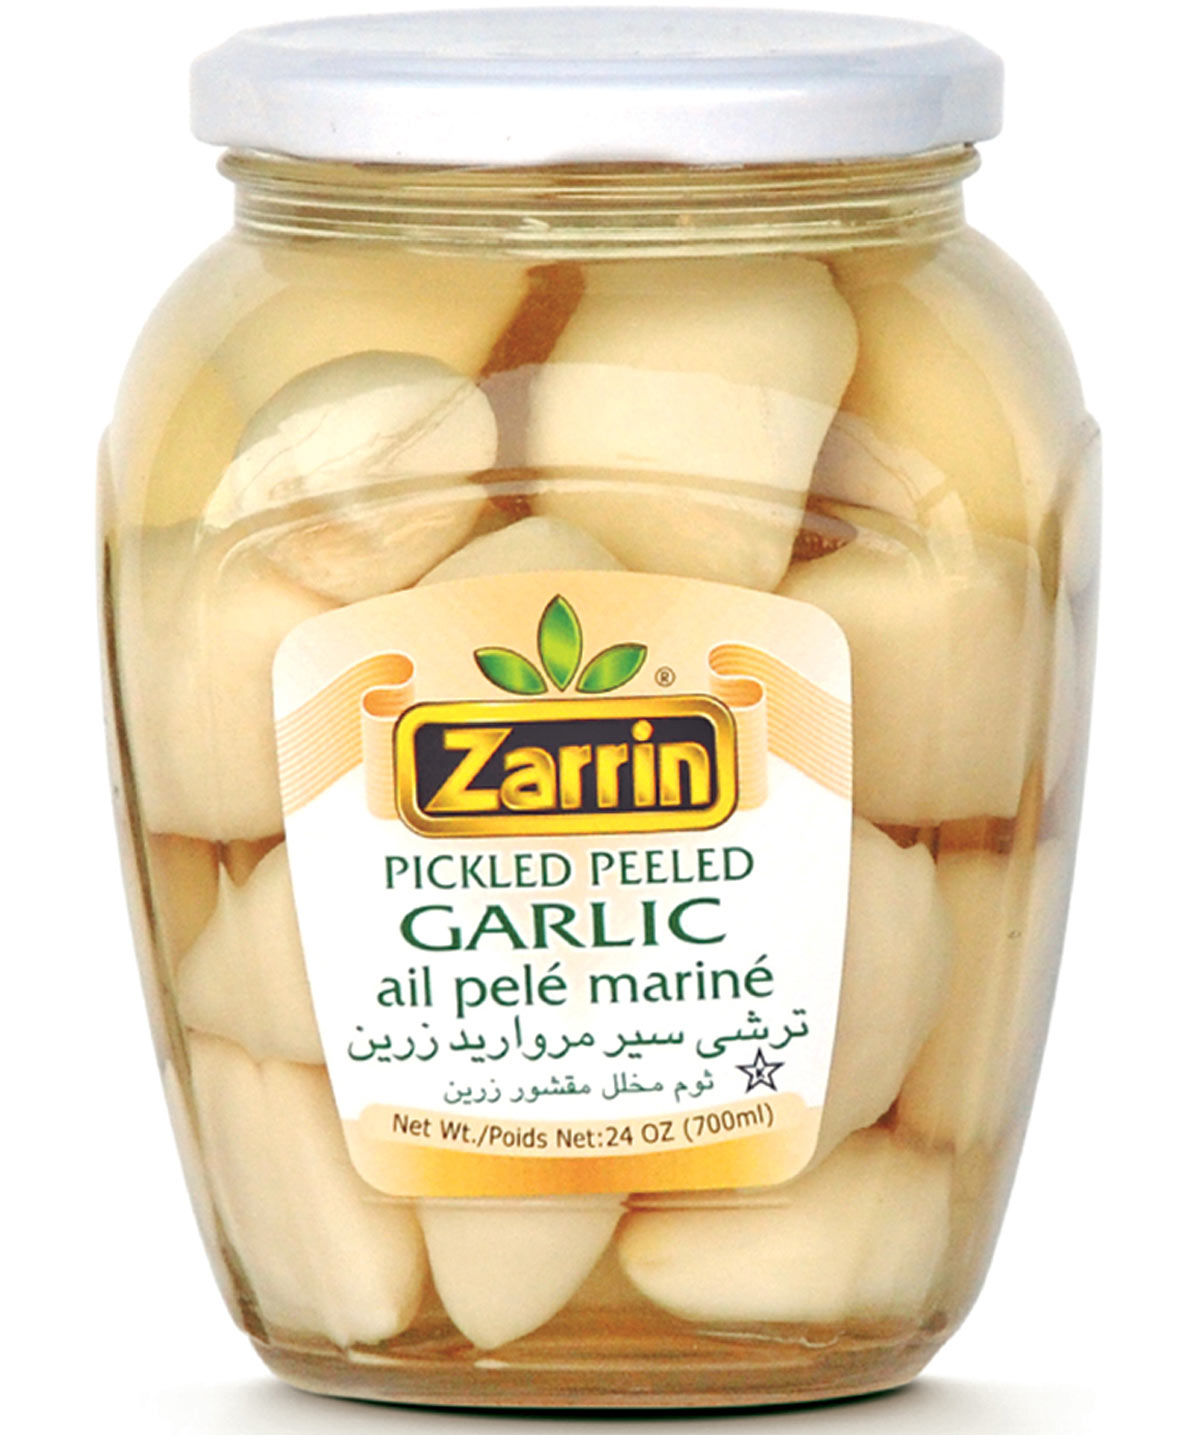 Zarrin Pickled Peeled Garlic In Glass Jar